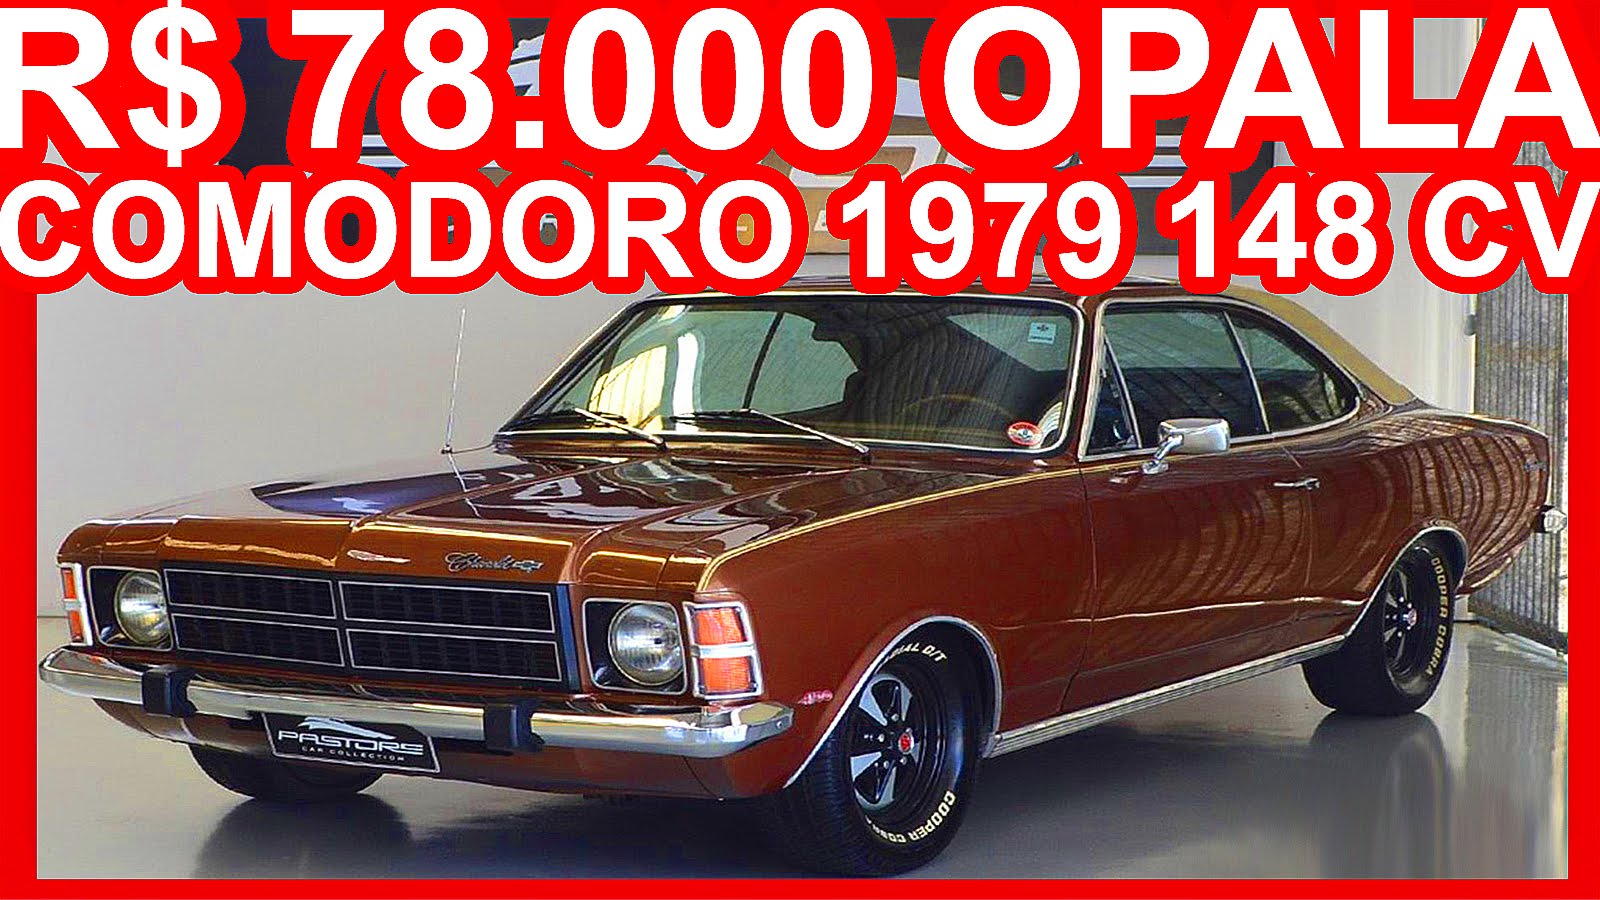 Chevrolet Opala Comodoro Pics, Vehicles Collection